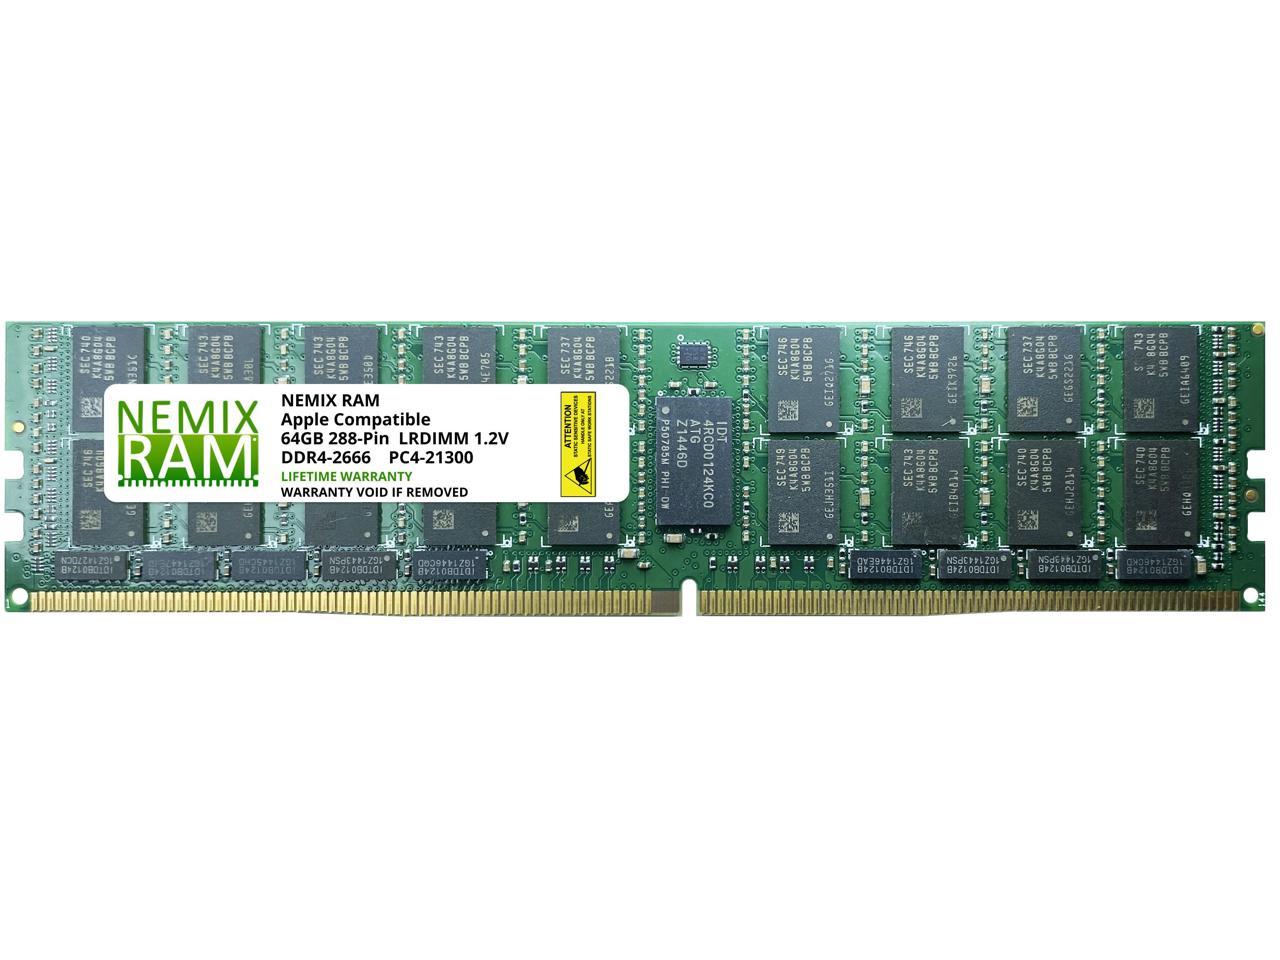 64GB DDR4-2666 PC4-21300 LRDIMM Memory for Apple Mac Pro 2019 MacPro 7,1 by  Nemix Ram